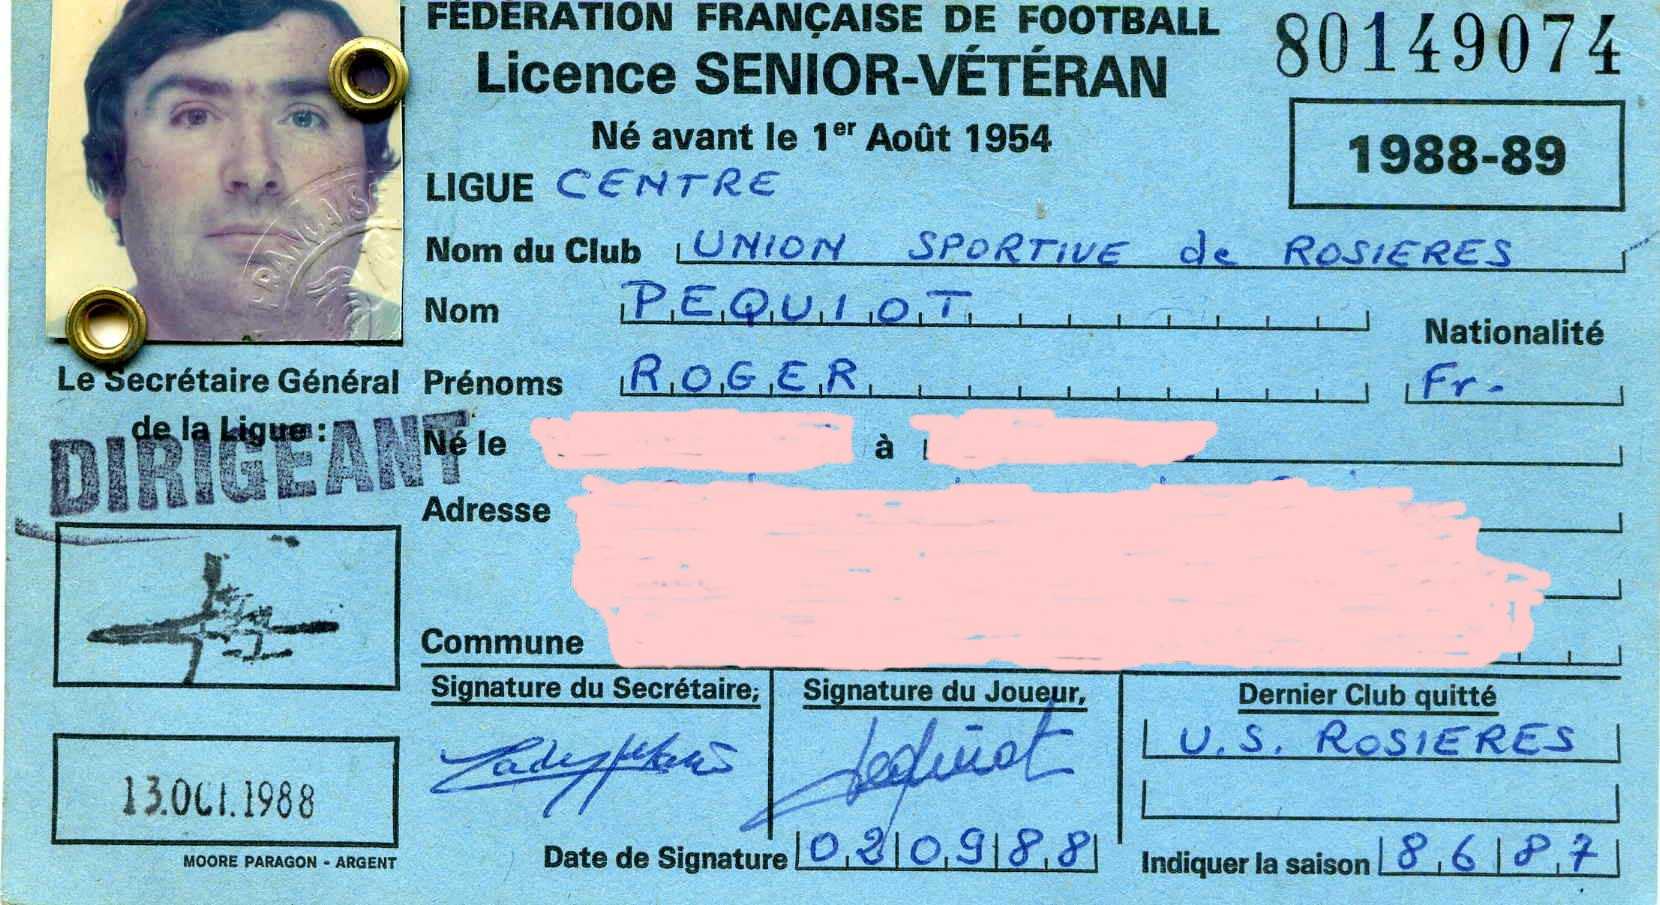 Licence Senior-Vétéran Roger PEQUIOT 1988-1989